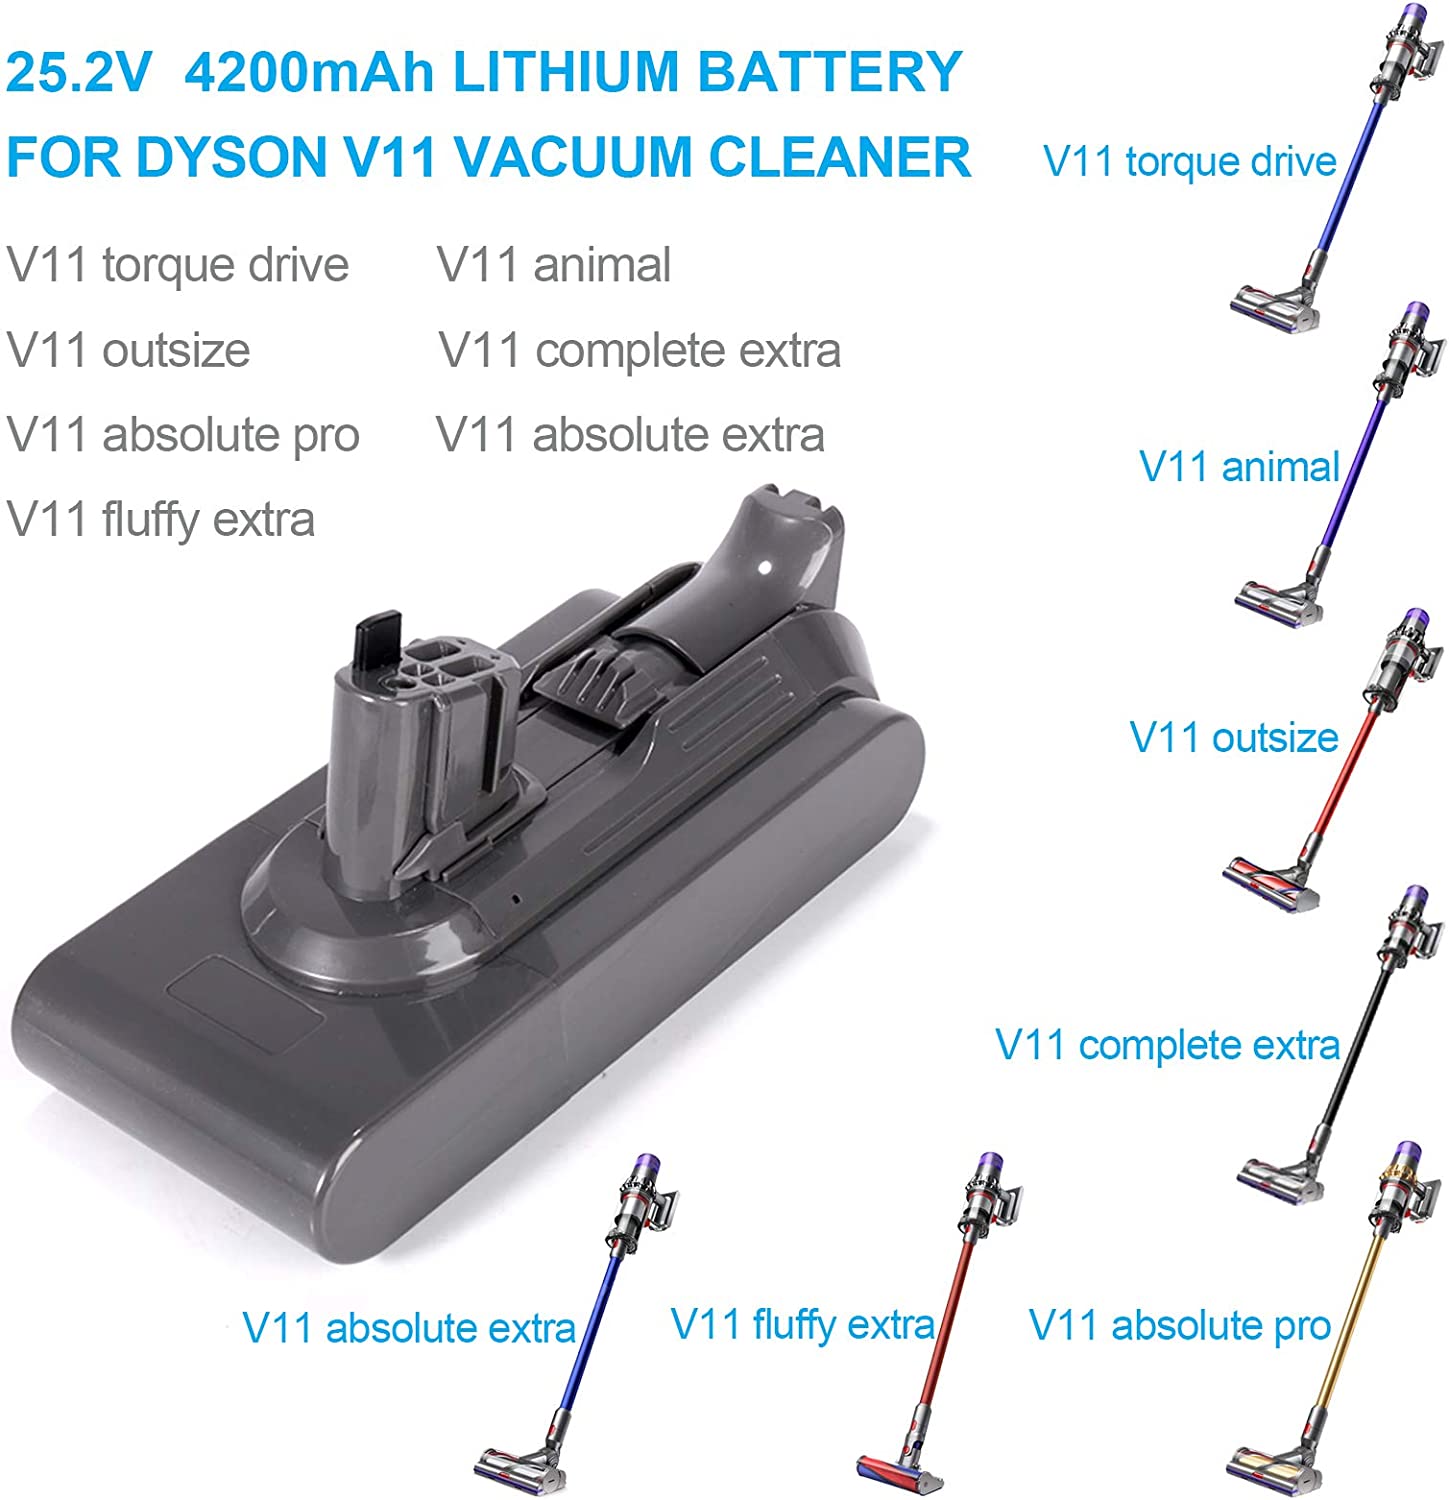 Buy Dyson V11 Battery online | Vacuum Specialists shop